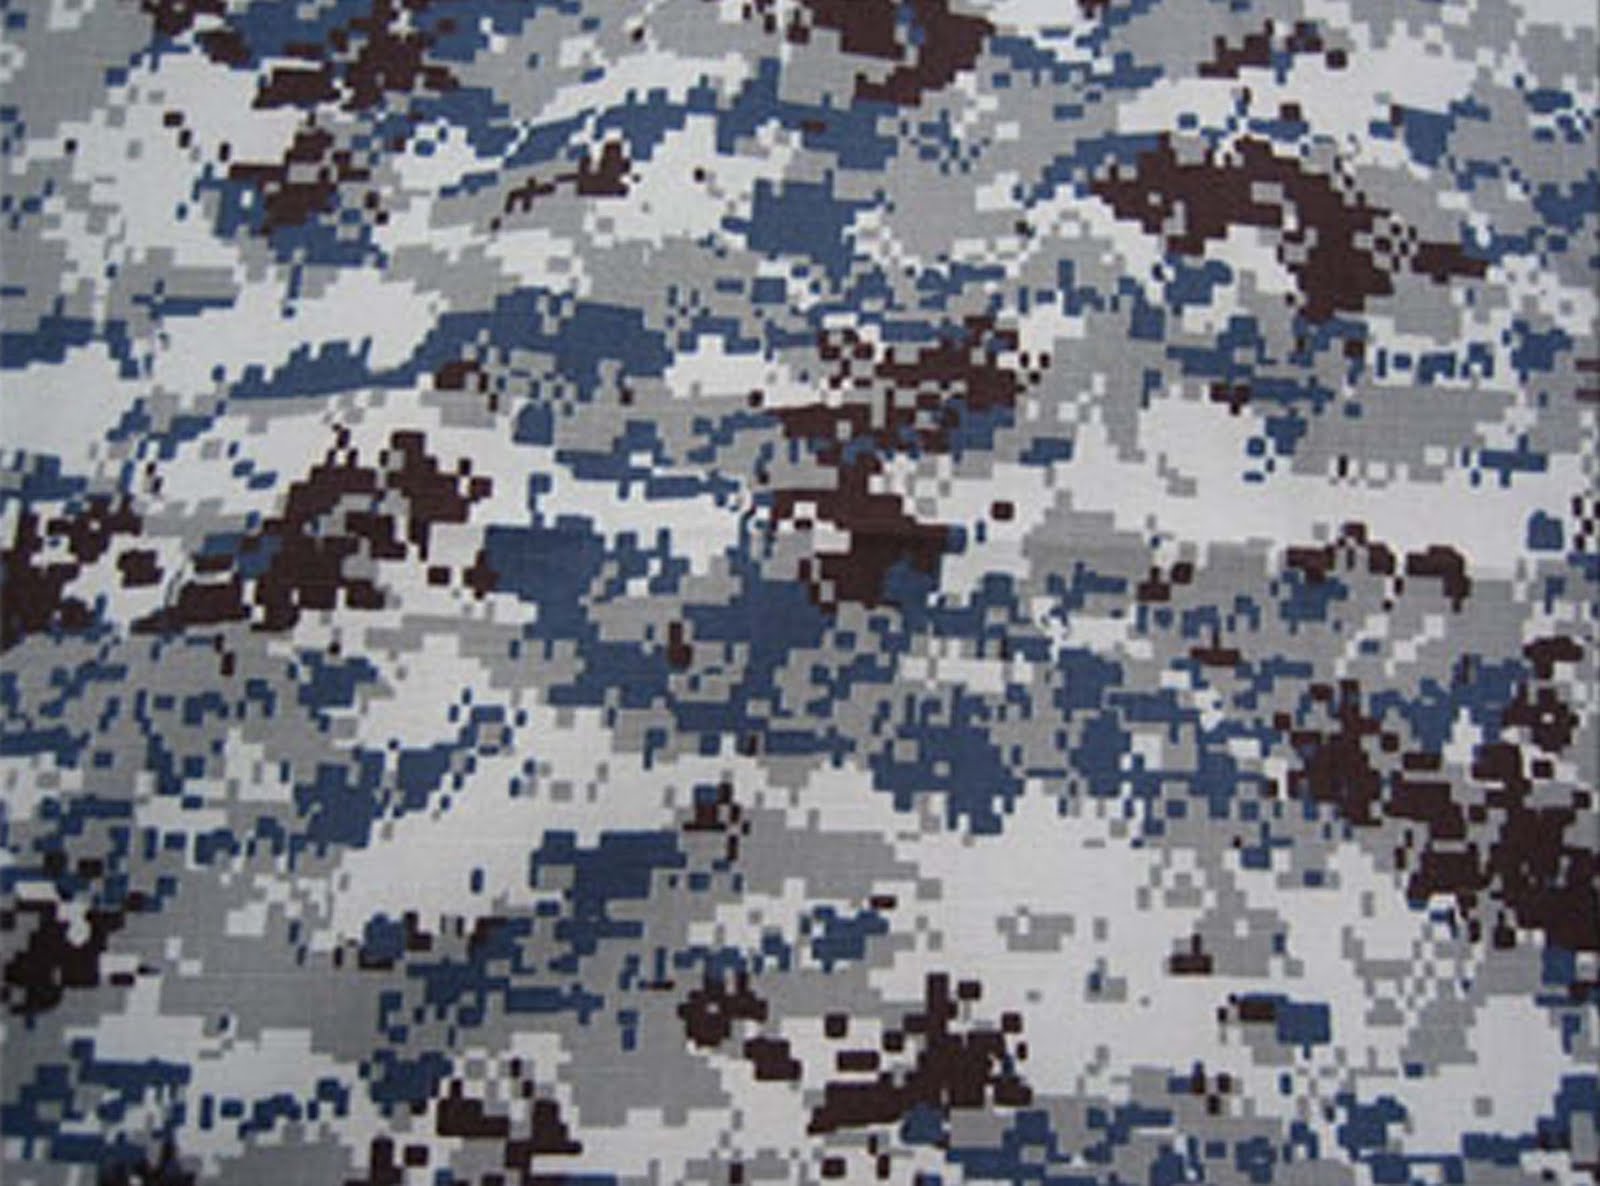 Buy ACU Digital Camouflage T-shirt at Army Surplus World